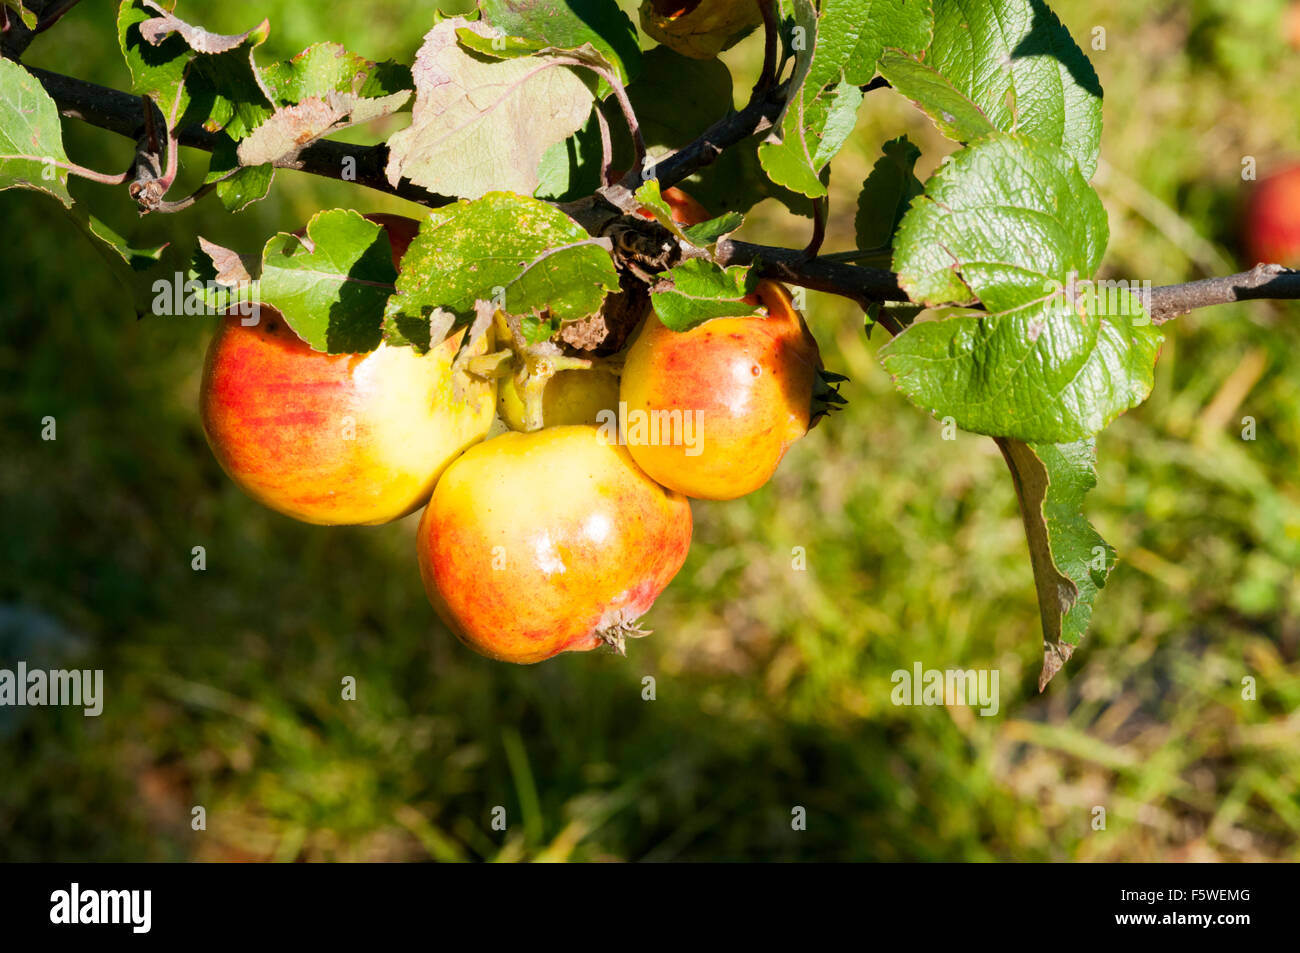 Newton Wonder apples growing on a tree. Stock Photo